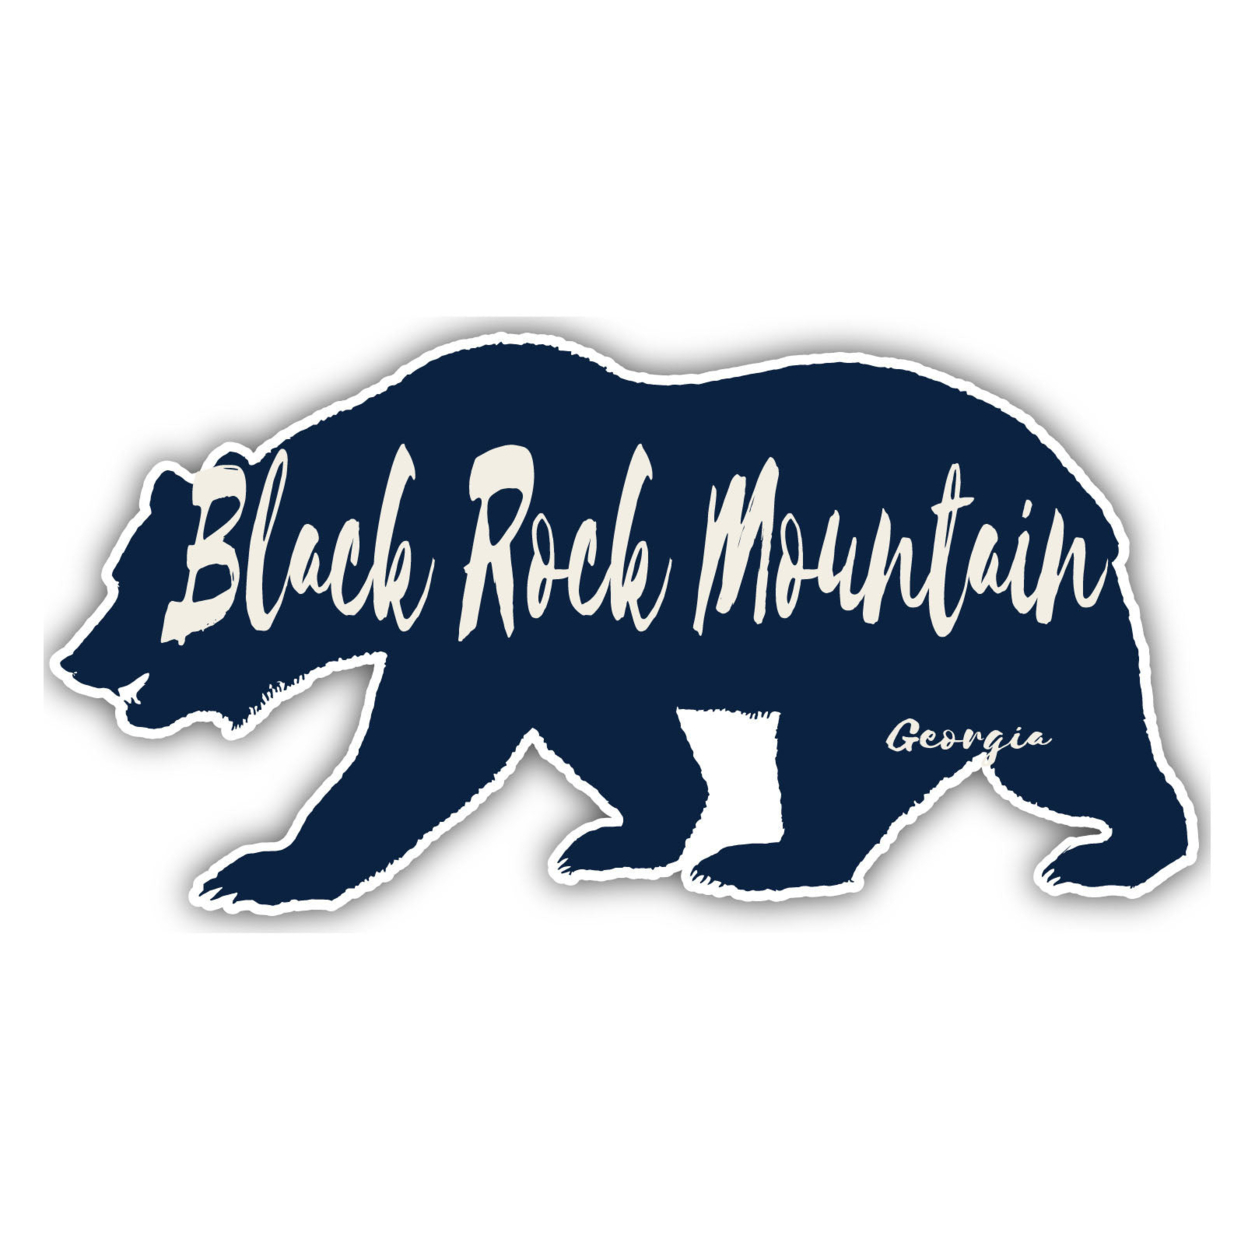 Black Rock Mountain Georgia Souvenir Decorative Stickers (Choose Theme And Size) - 4-Pack, 10-Inch, Bear